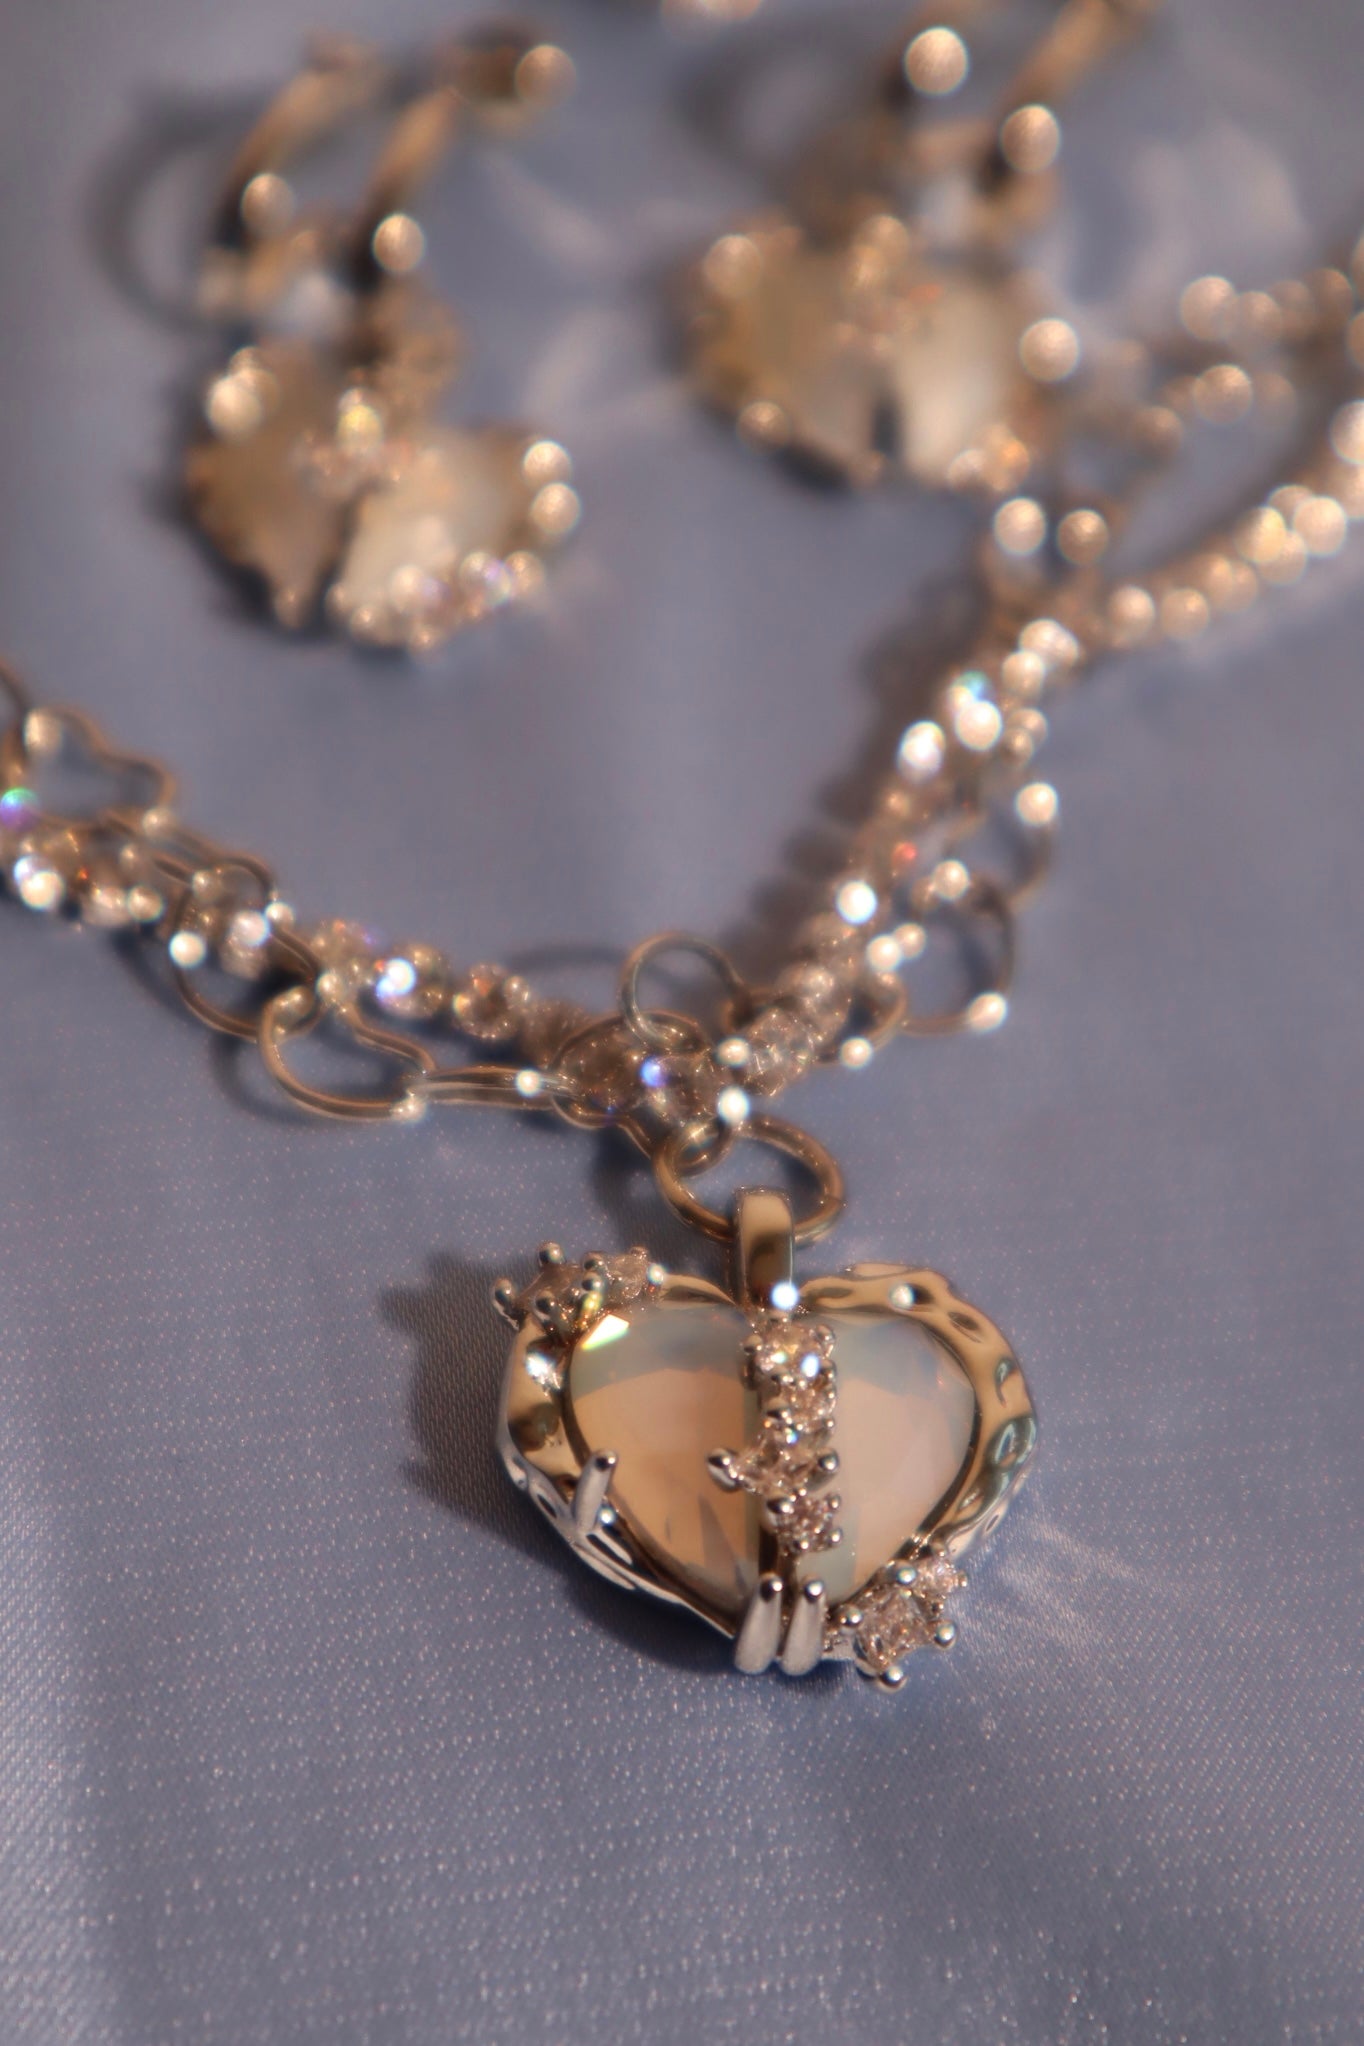 Blue Opal Heart necklace